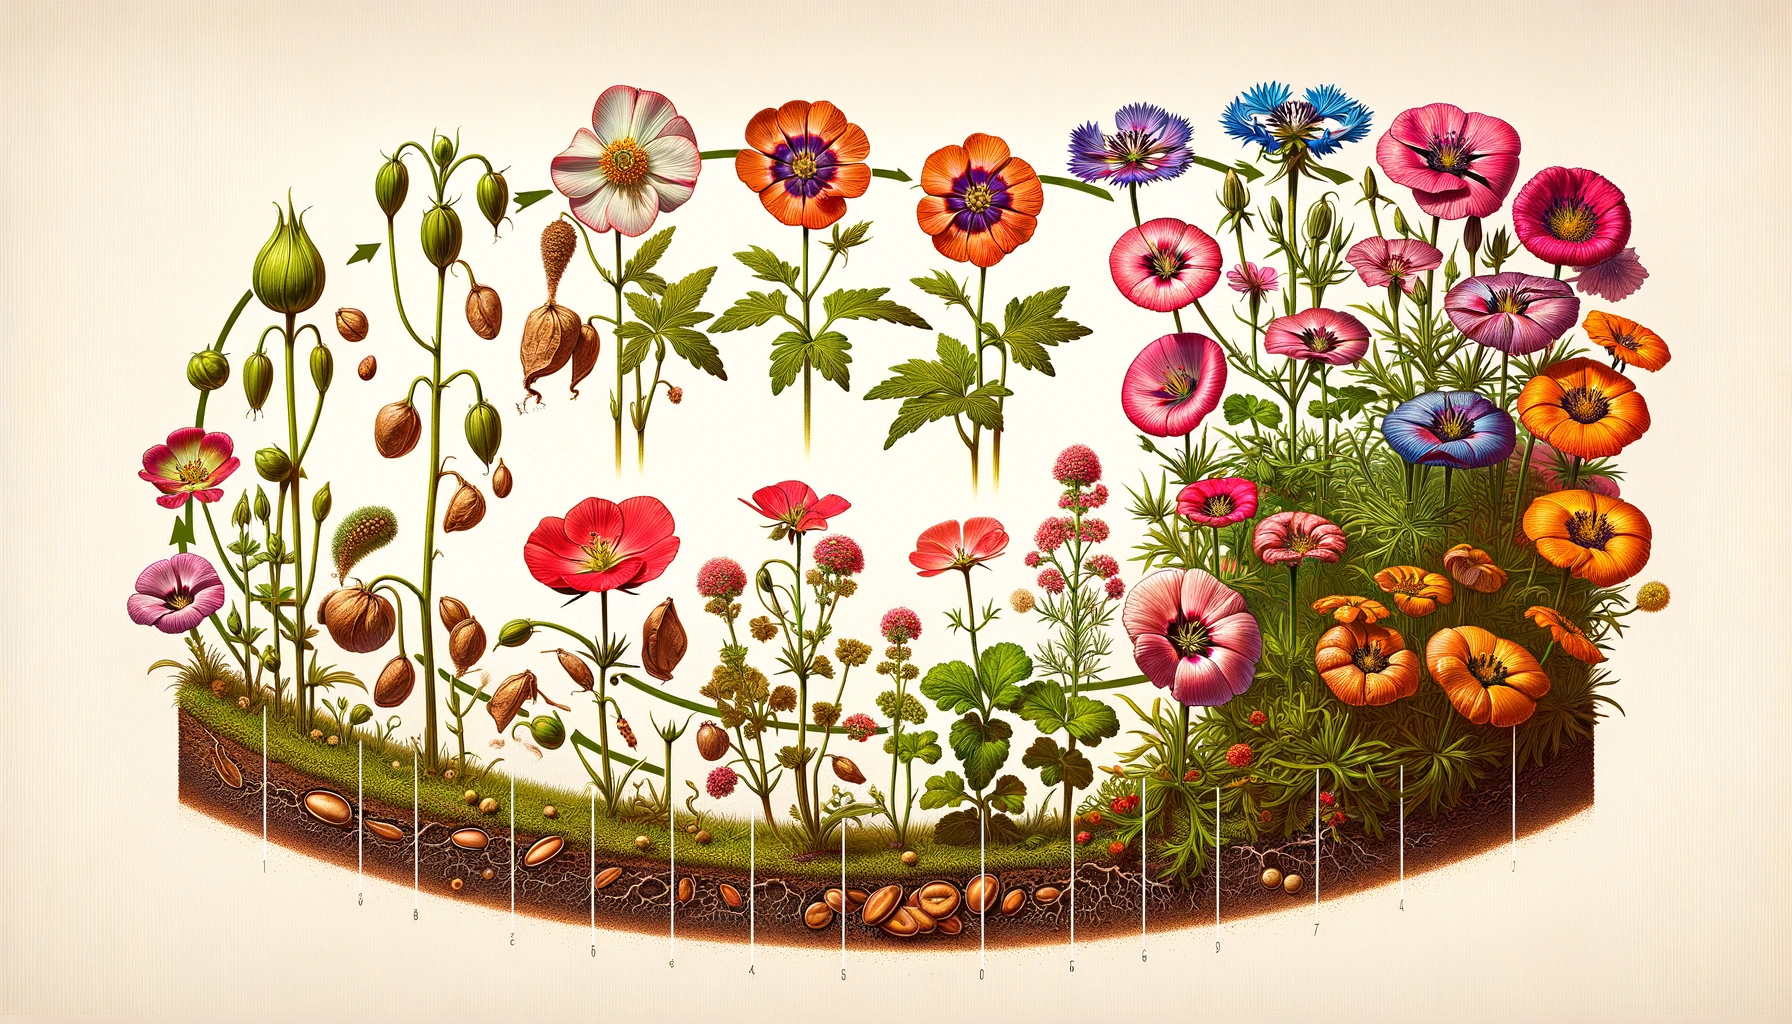 Colorful botanical illustration of various flowering plants.